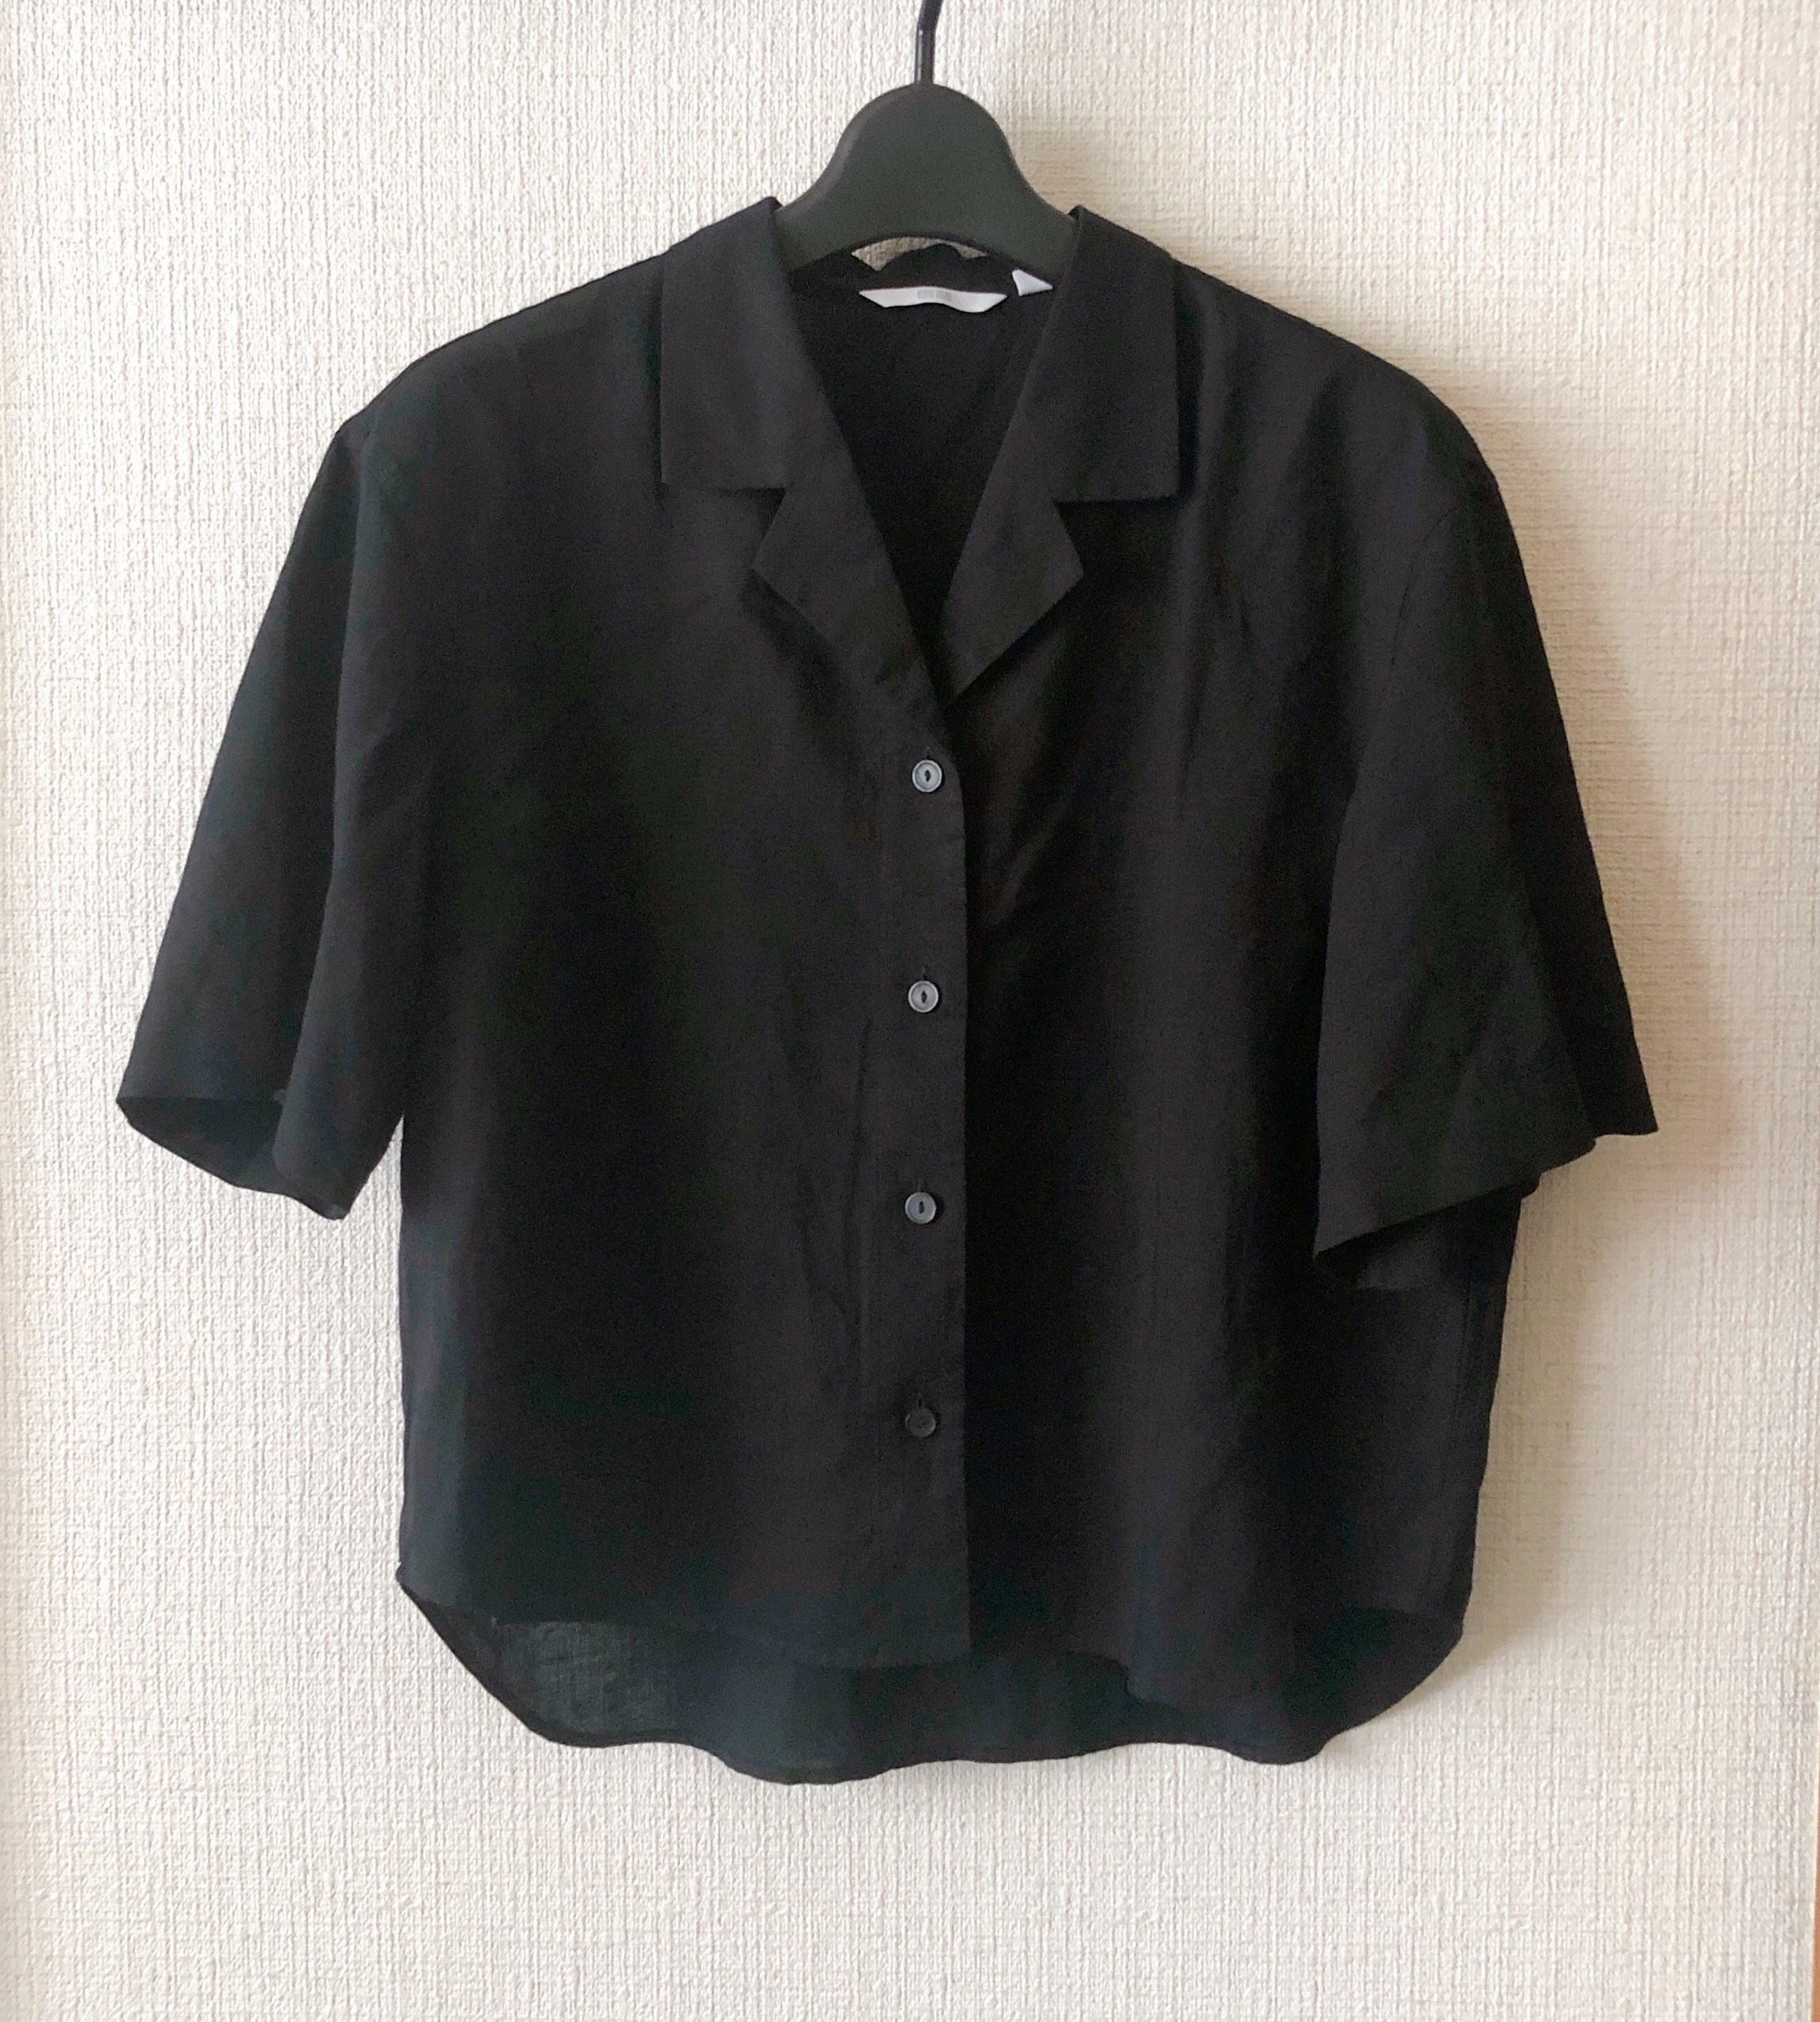 ☆UNIQLO（ユニクロ）の新作レディースアイテム「リネンブレンド オープンカラーシャツ（半袖）」リネン素材で夏コーデにおすすめ